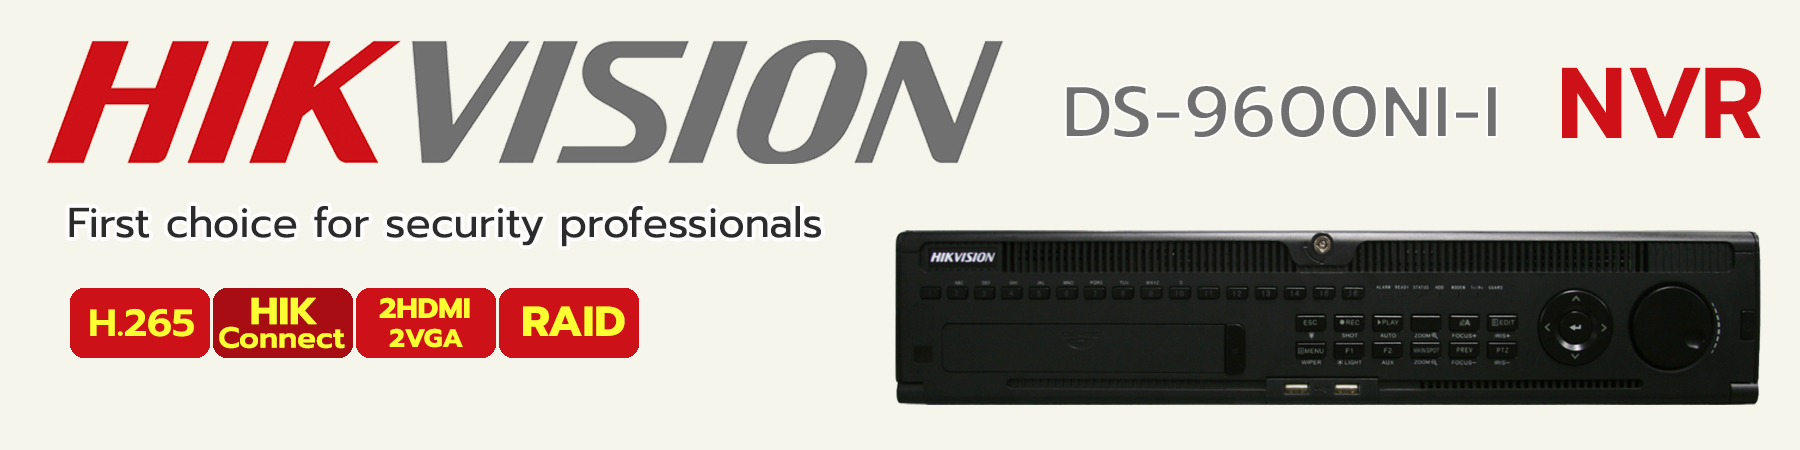 Hikvision NVR, Hikvision Network Video Recorder, เครื่องบันทึก Hikvision NVR, DS-9632NI-I8, DS-9632NI-I16, DS-9664NI-I8, DS-9664NI-I16